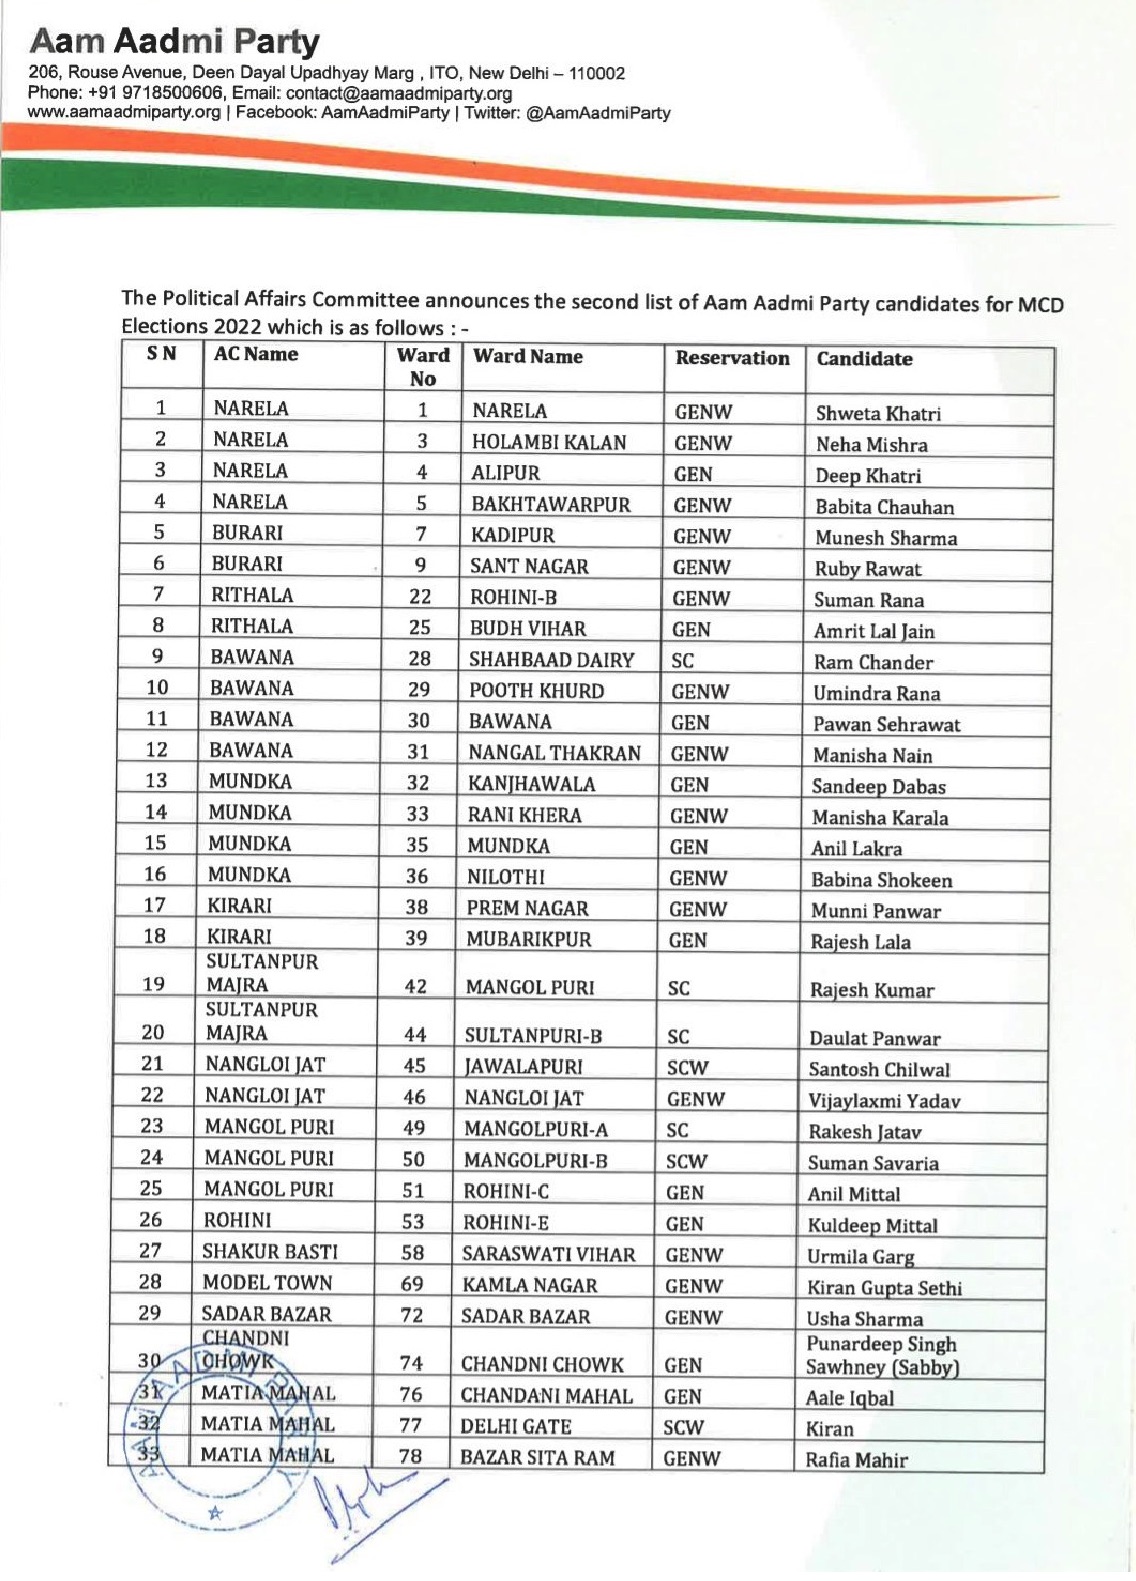 AAP MCD Candidates List 2022 Delhi